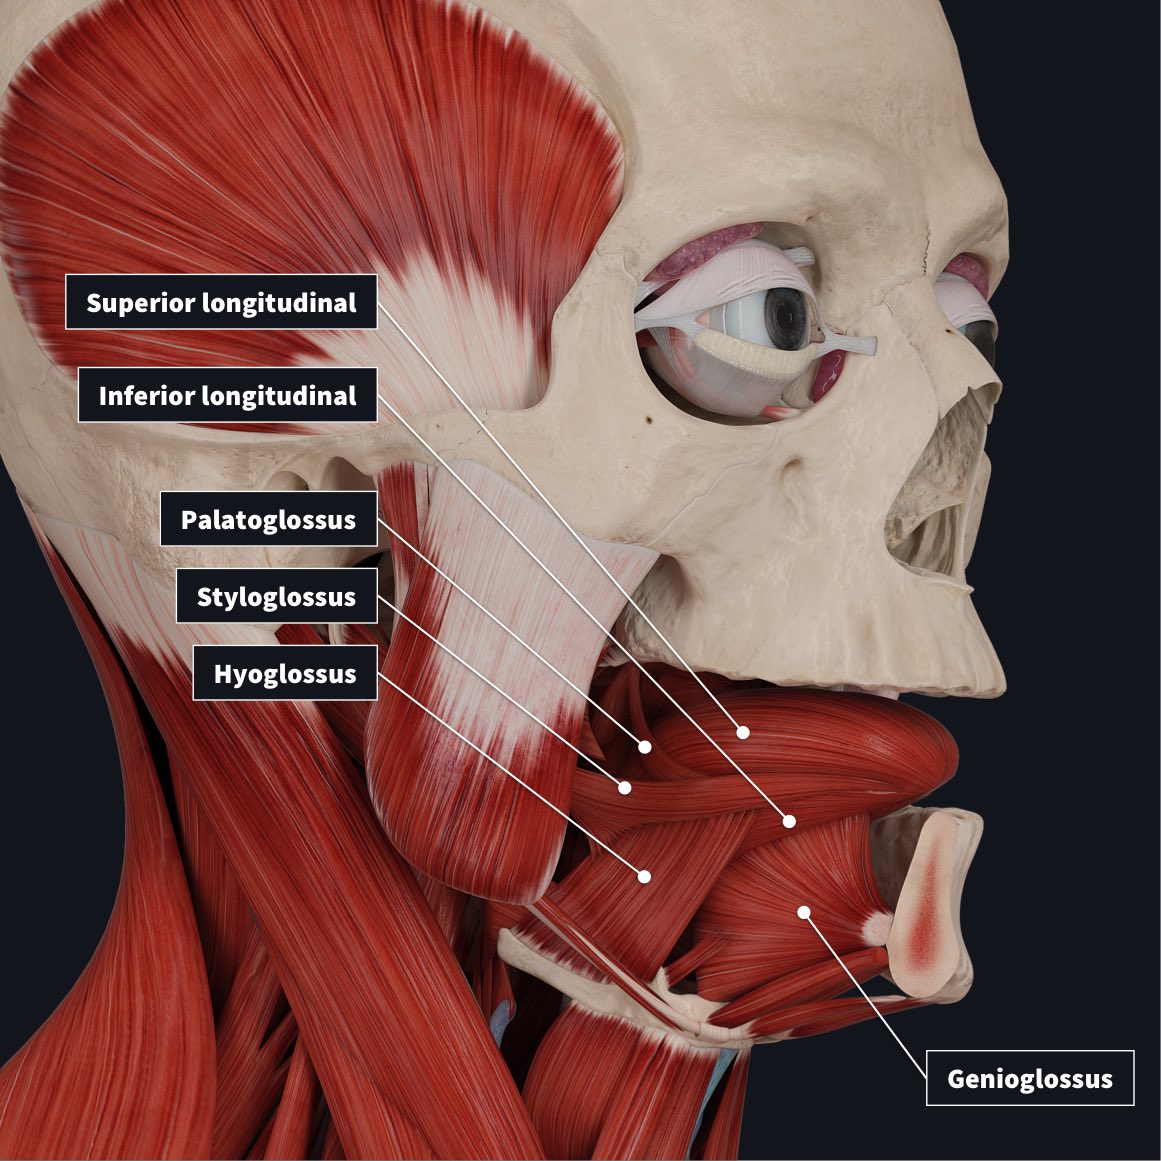 Extrinsic tongue muscles with Superior longitudinal, Inferior longitudinal, Palatoglossus, Styloglossus, Hyoglossus and Genioglossus muscles labelled